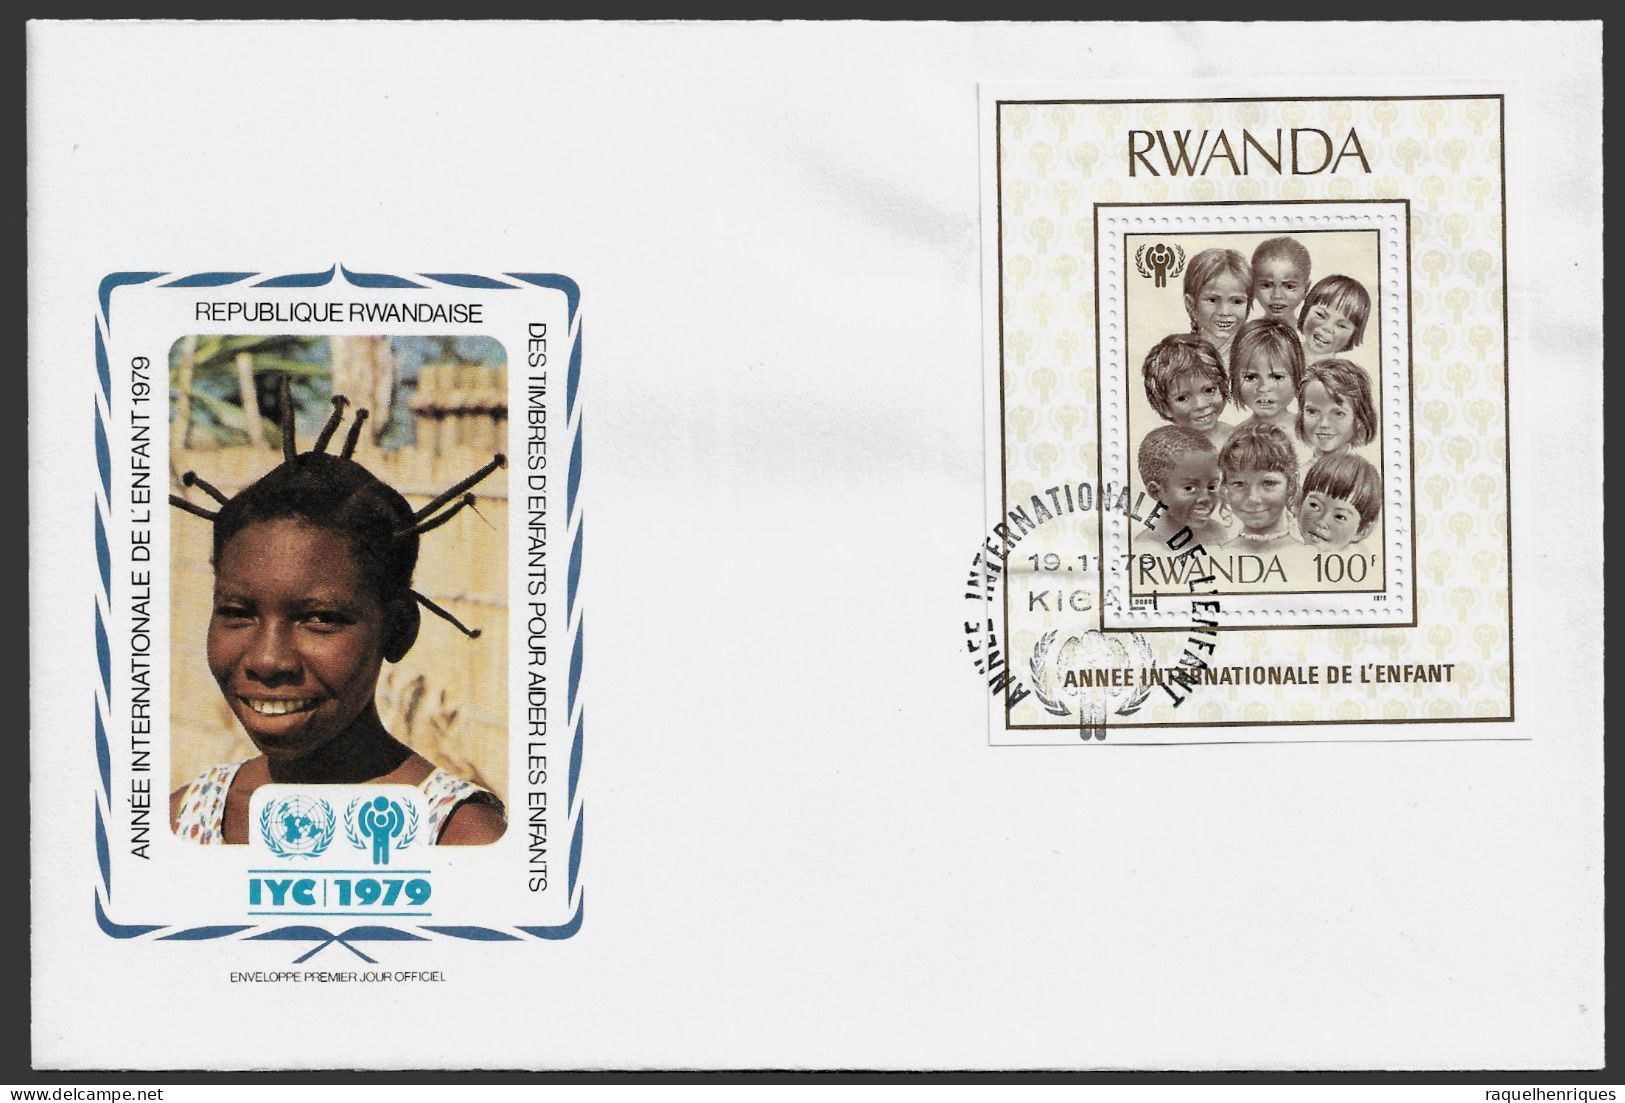 RWANDA FDC COVER - 1979 International Year Of The Child - MINISHEET FDC (FDC79#03) - Briefe U. Dokumente